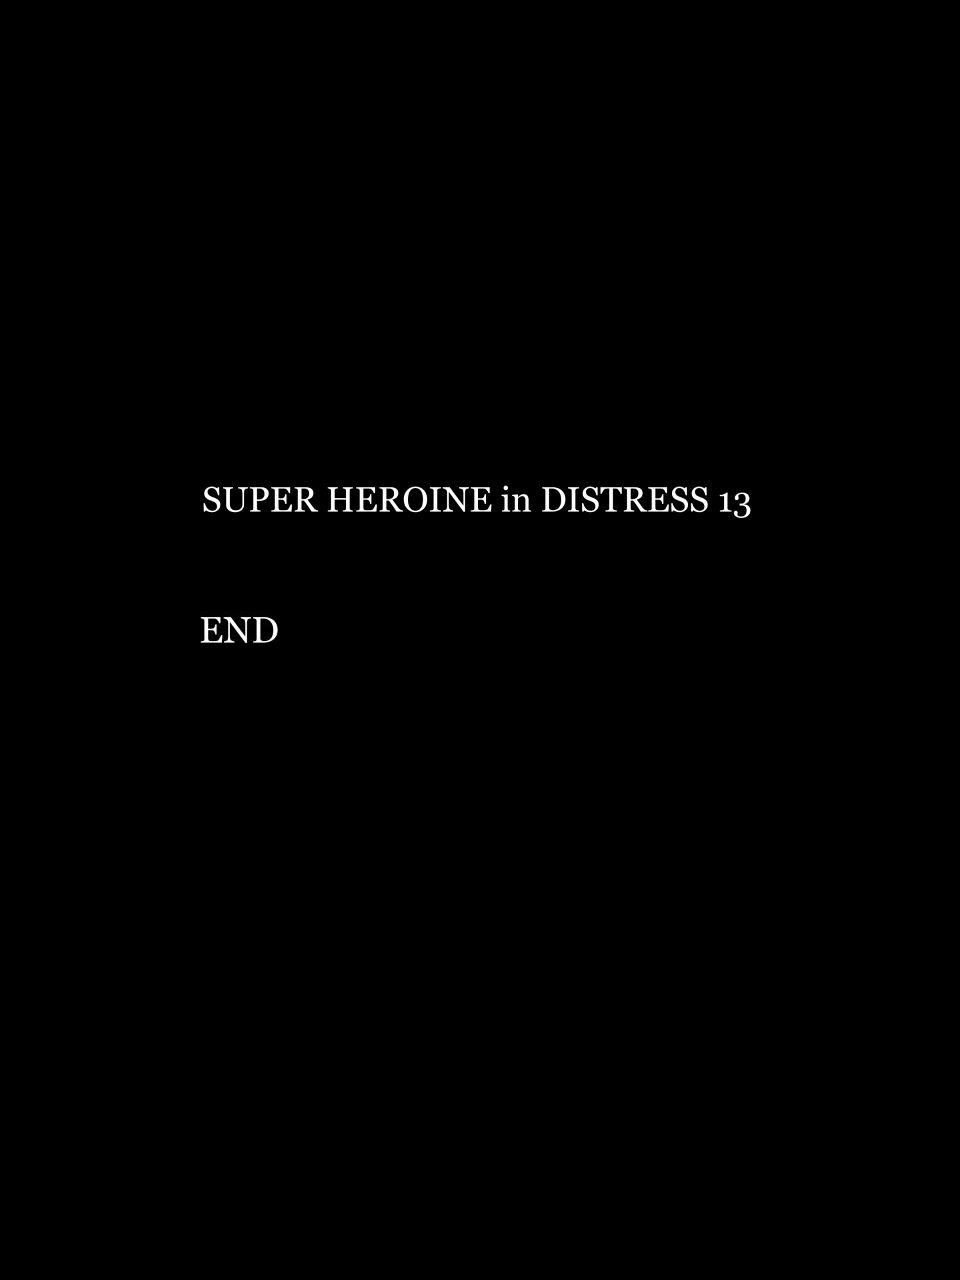 [Atelier Hachifukuan] Superheroine Yuukai Ryoujoku 13 - Superheroine in Distress - BAD ENDING 43